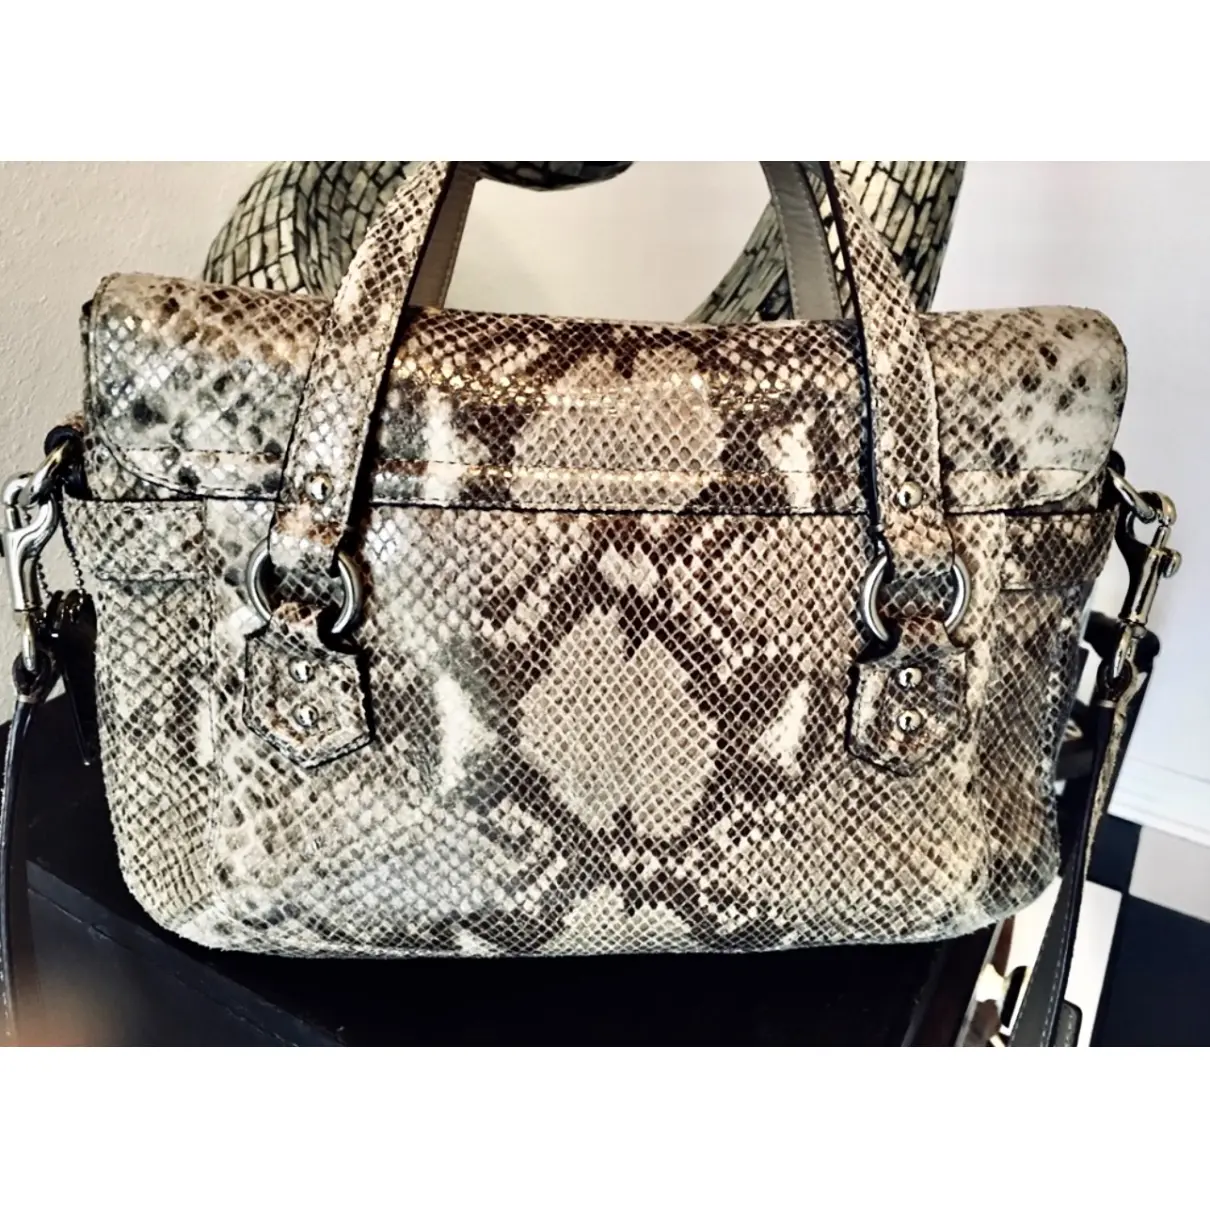 Buy Coach Python handbag online